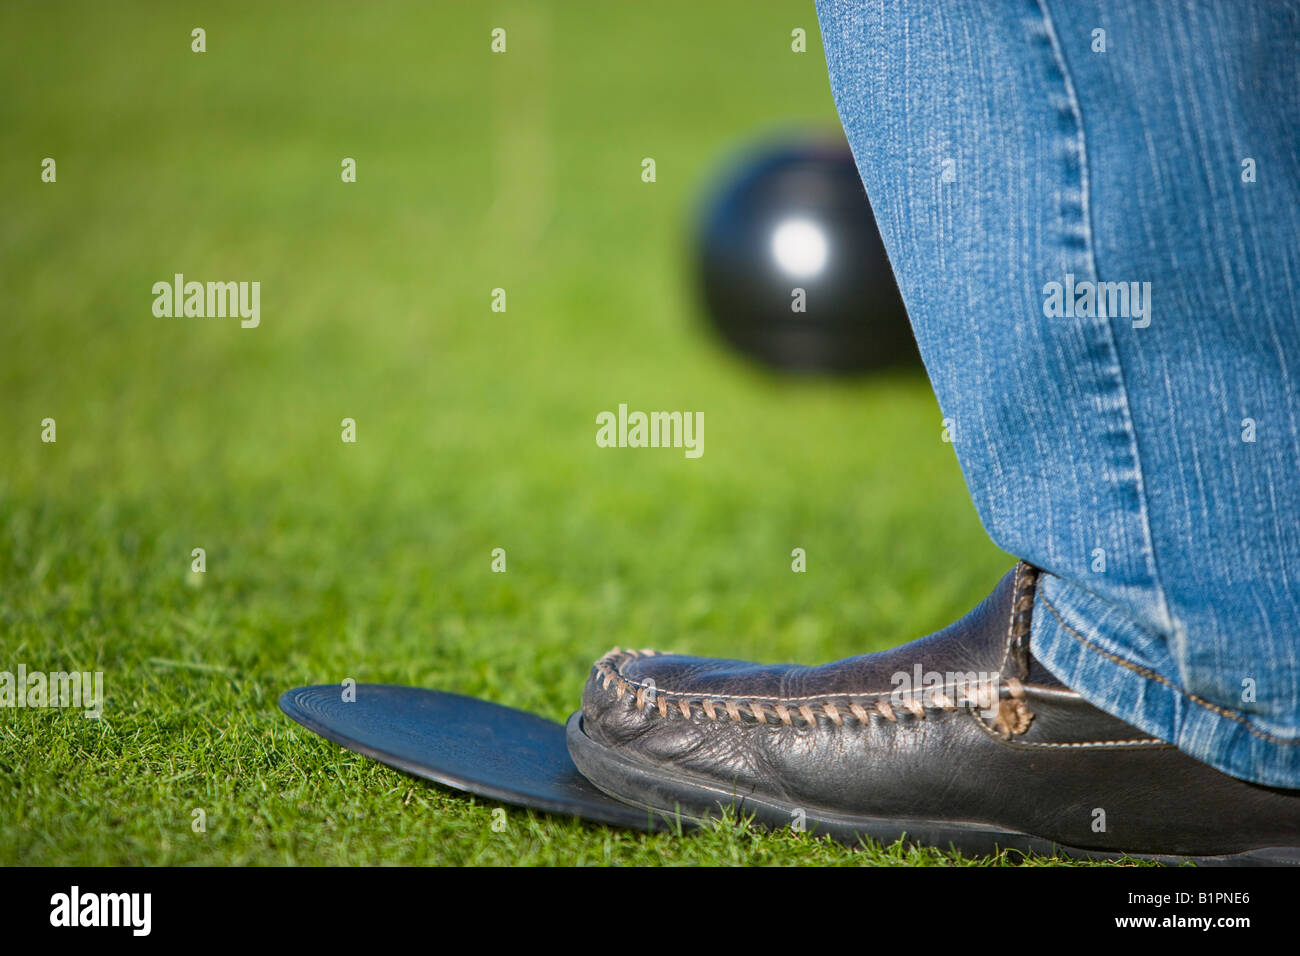 crown green bowling mat Stock Photo